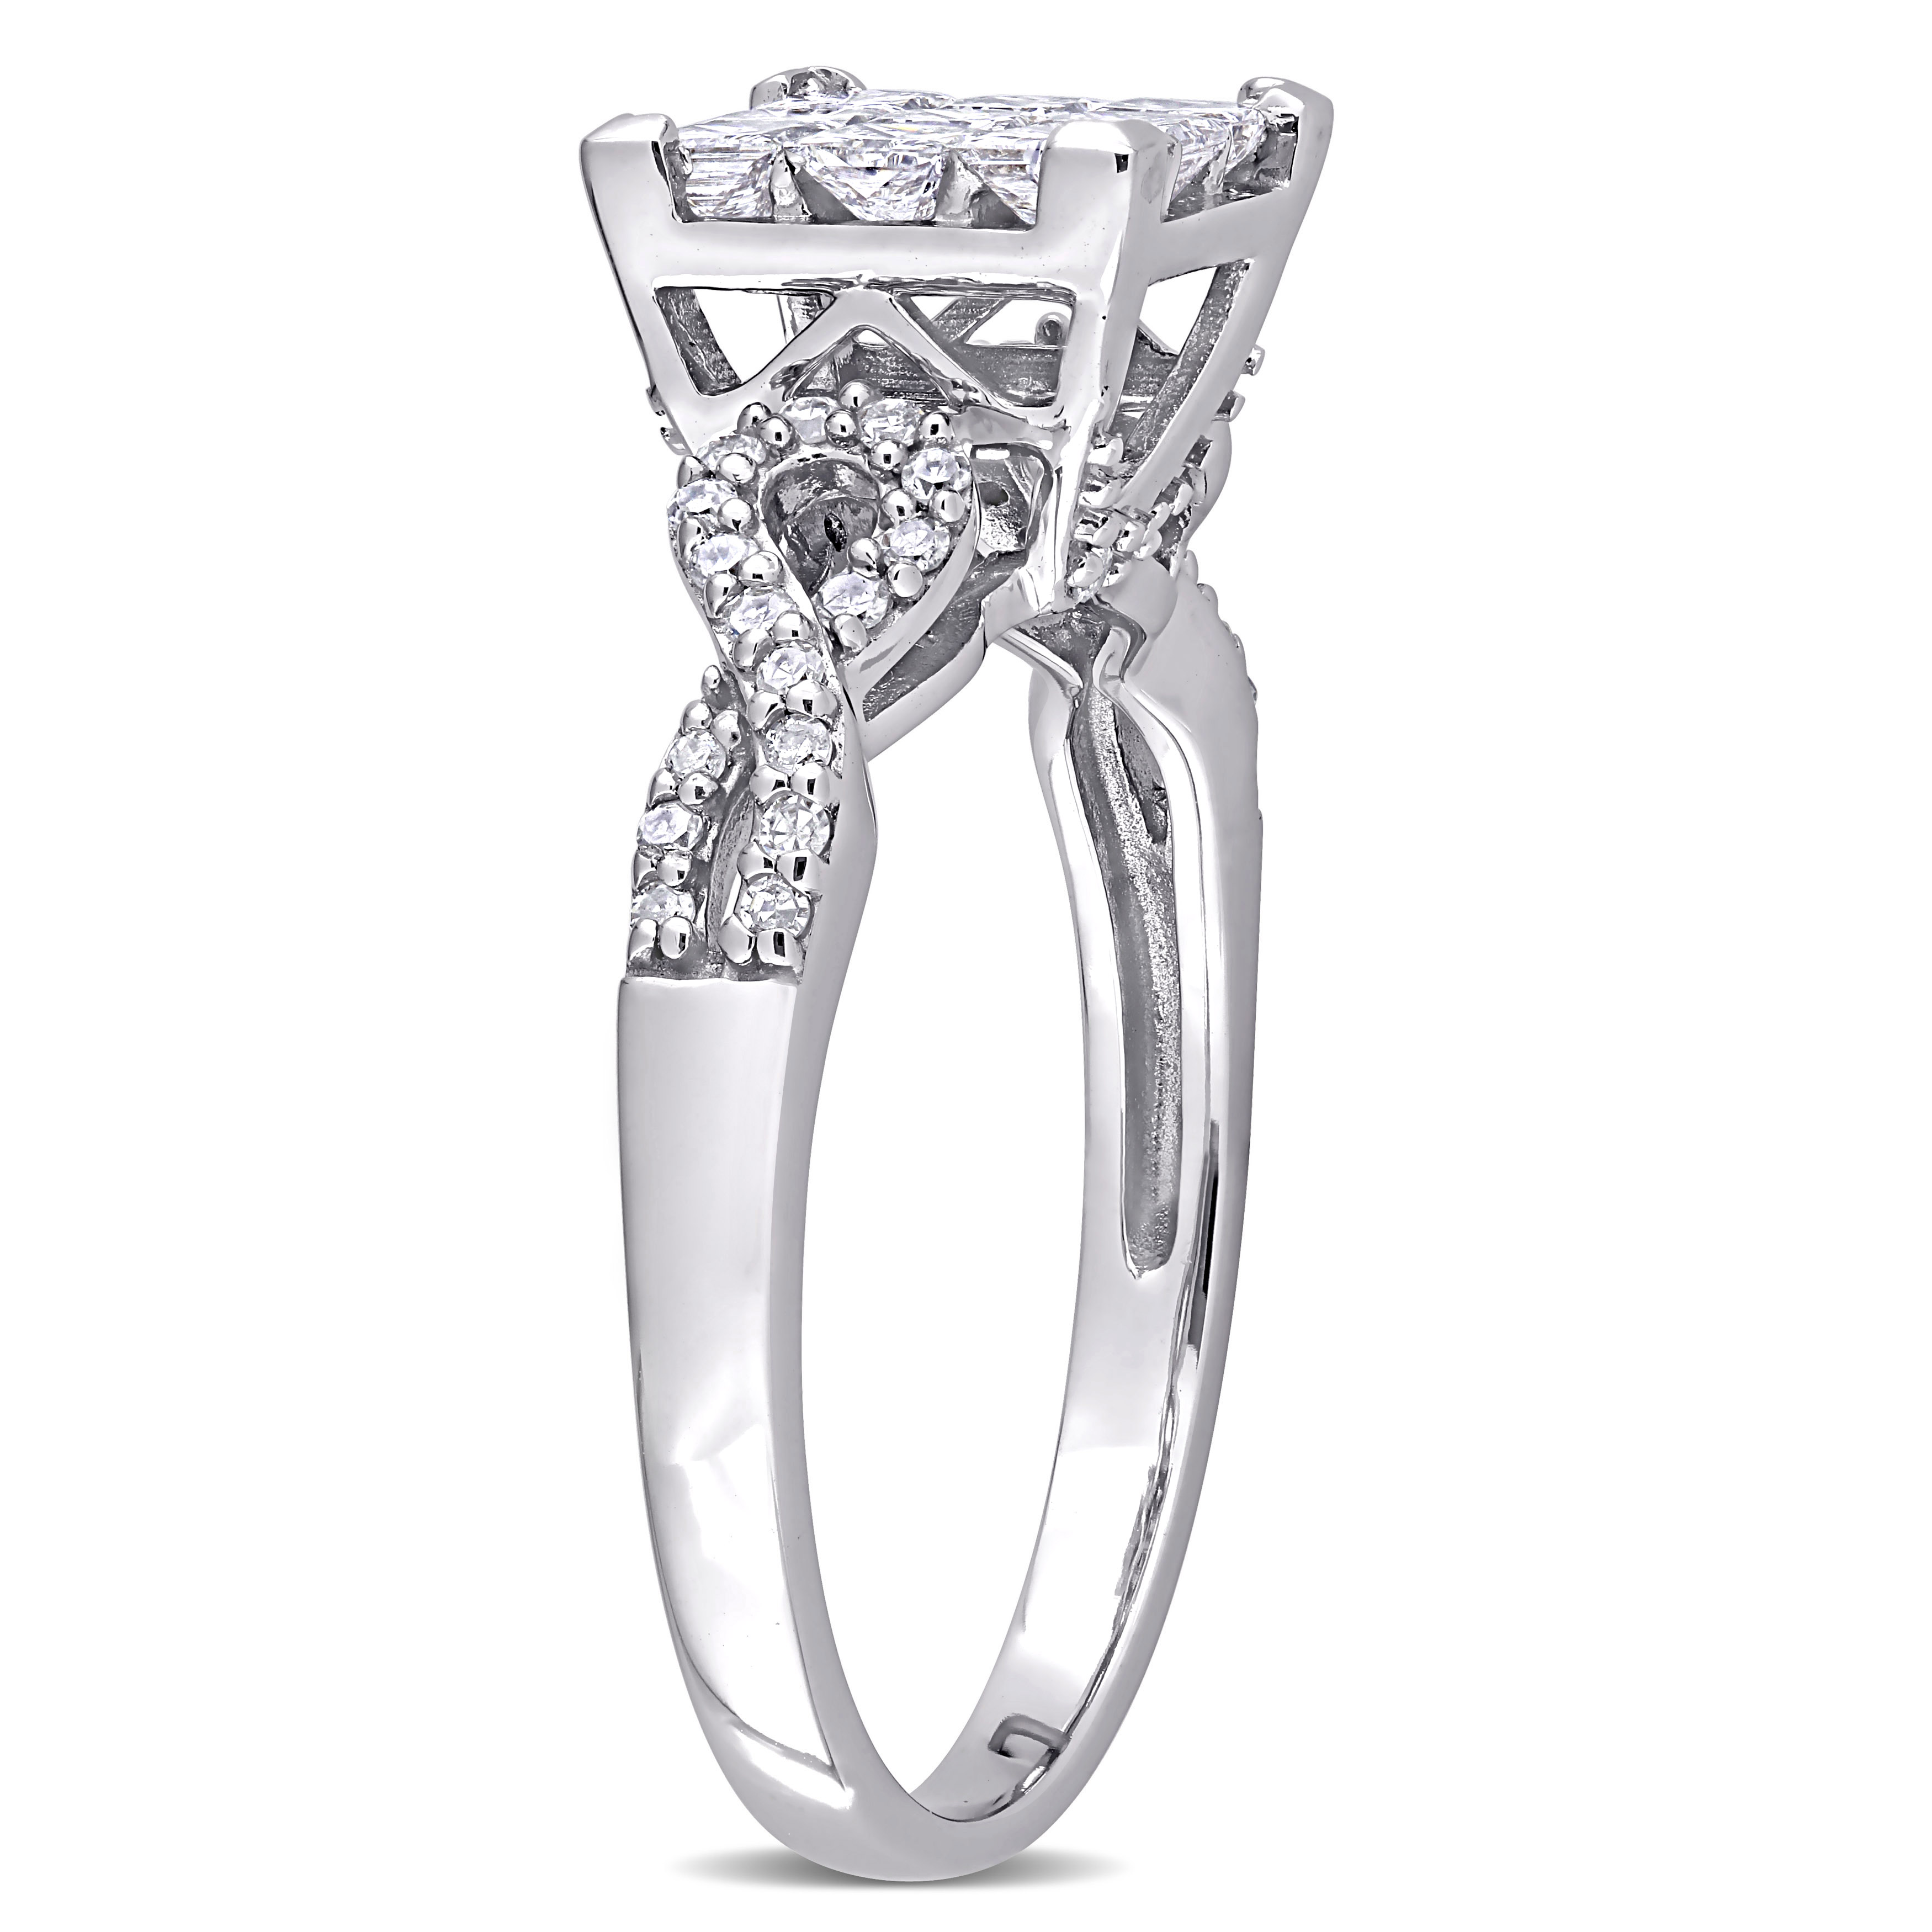 1 CT TW Princess Cut Diamond Engagement Ring in 10k White Gold